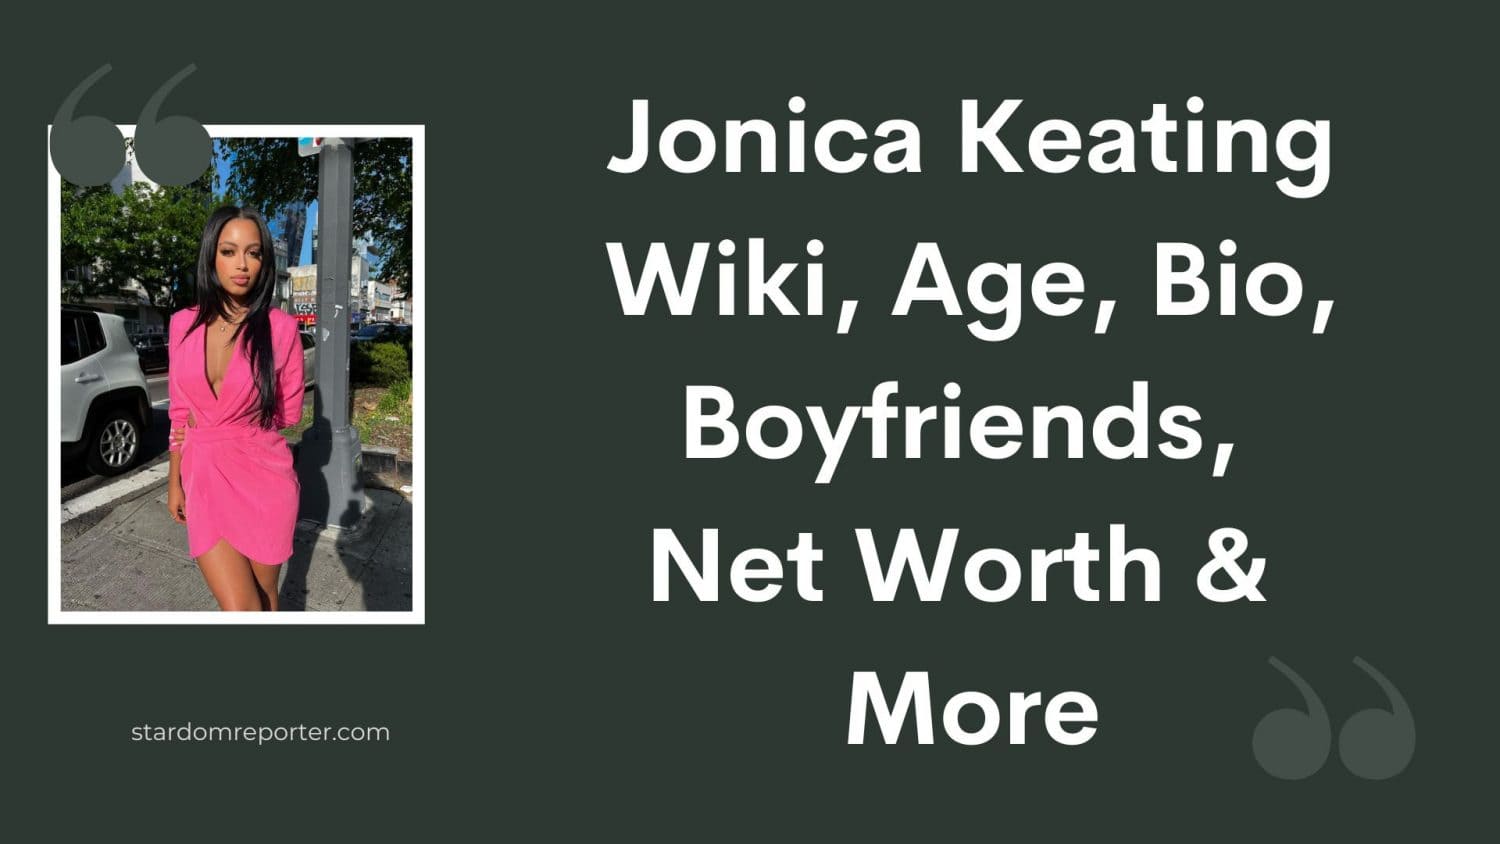 Jonica Keating Wiki, Age, Bio, Boyfriends, Net Worth & More - 25